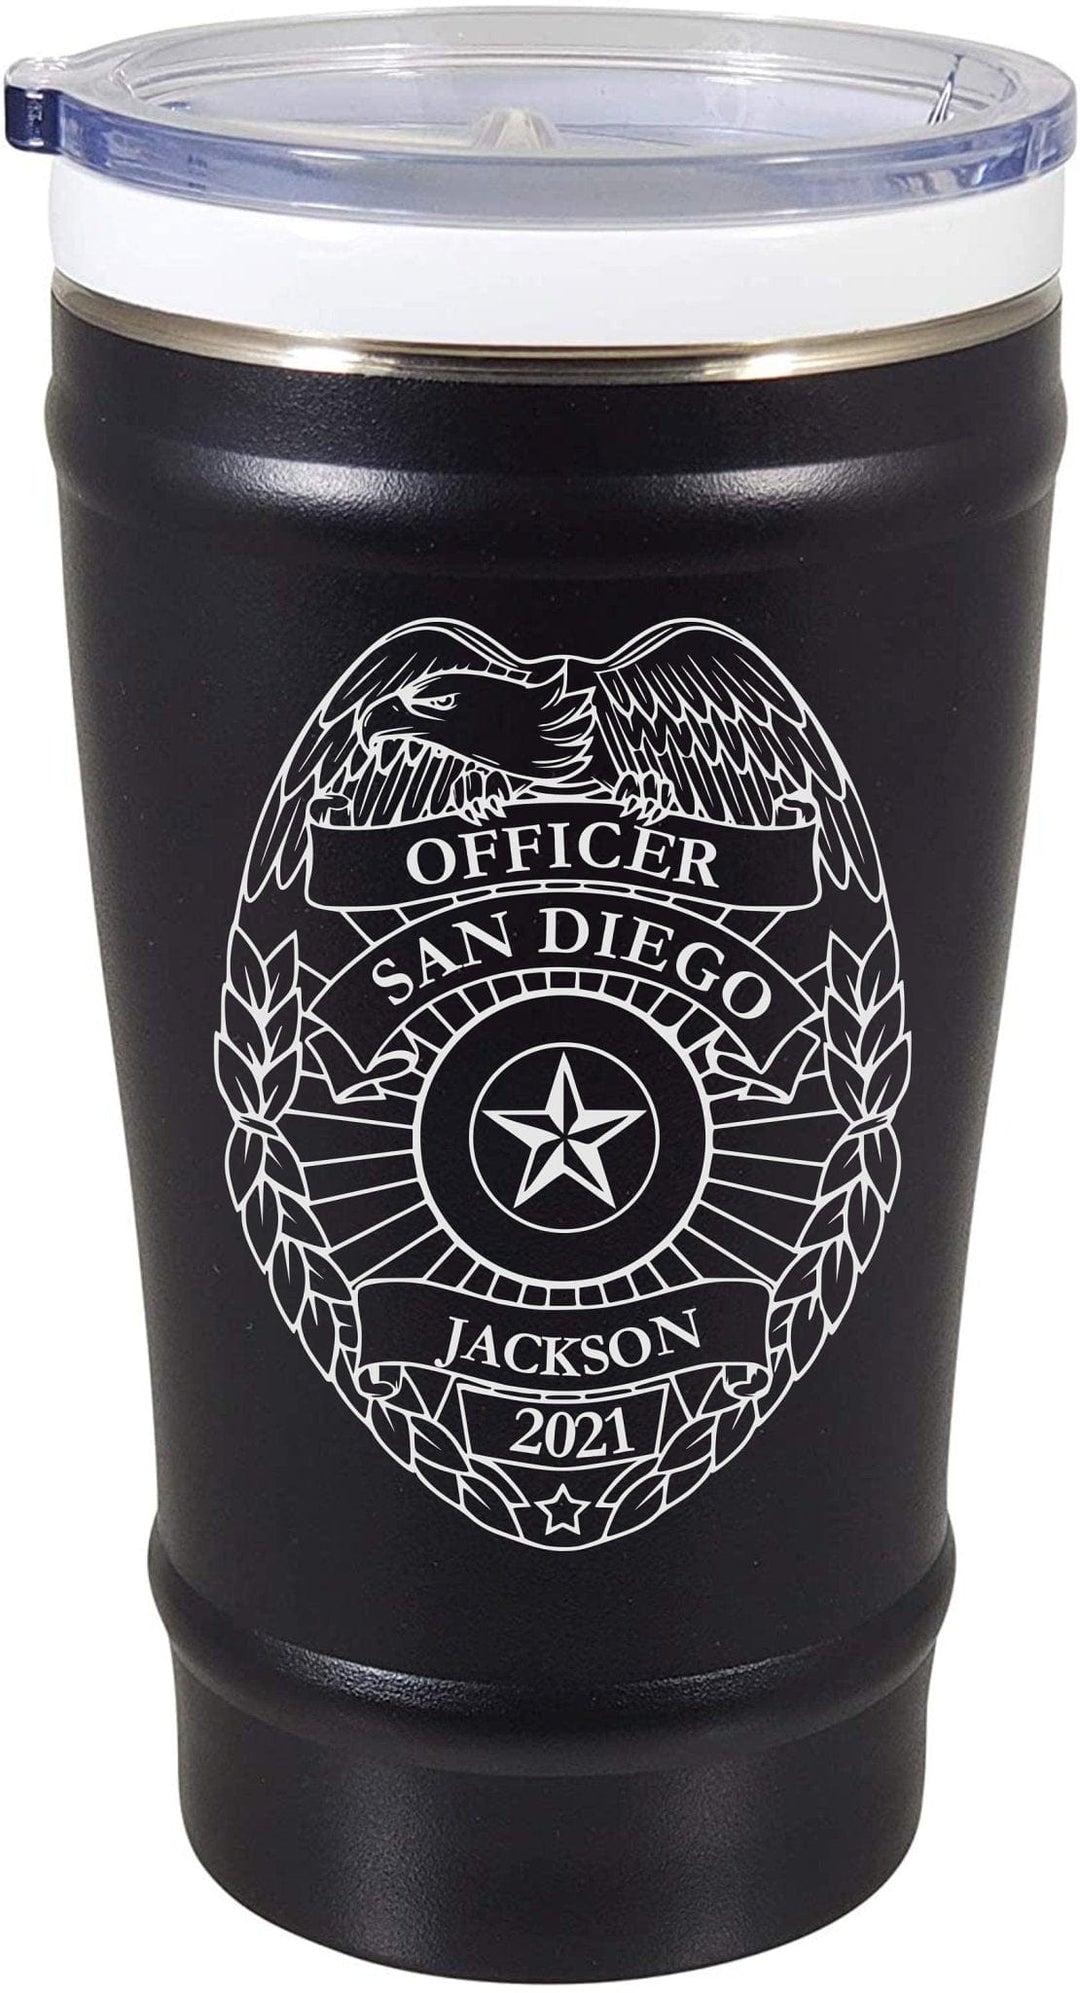 Police Officer Gift - 16 oz Ceramisteel Coffee Tumbler Black with White Rim